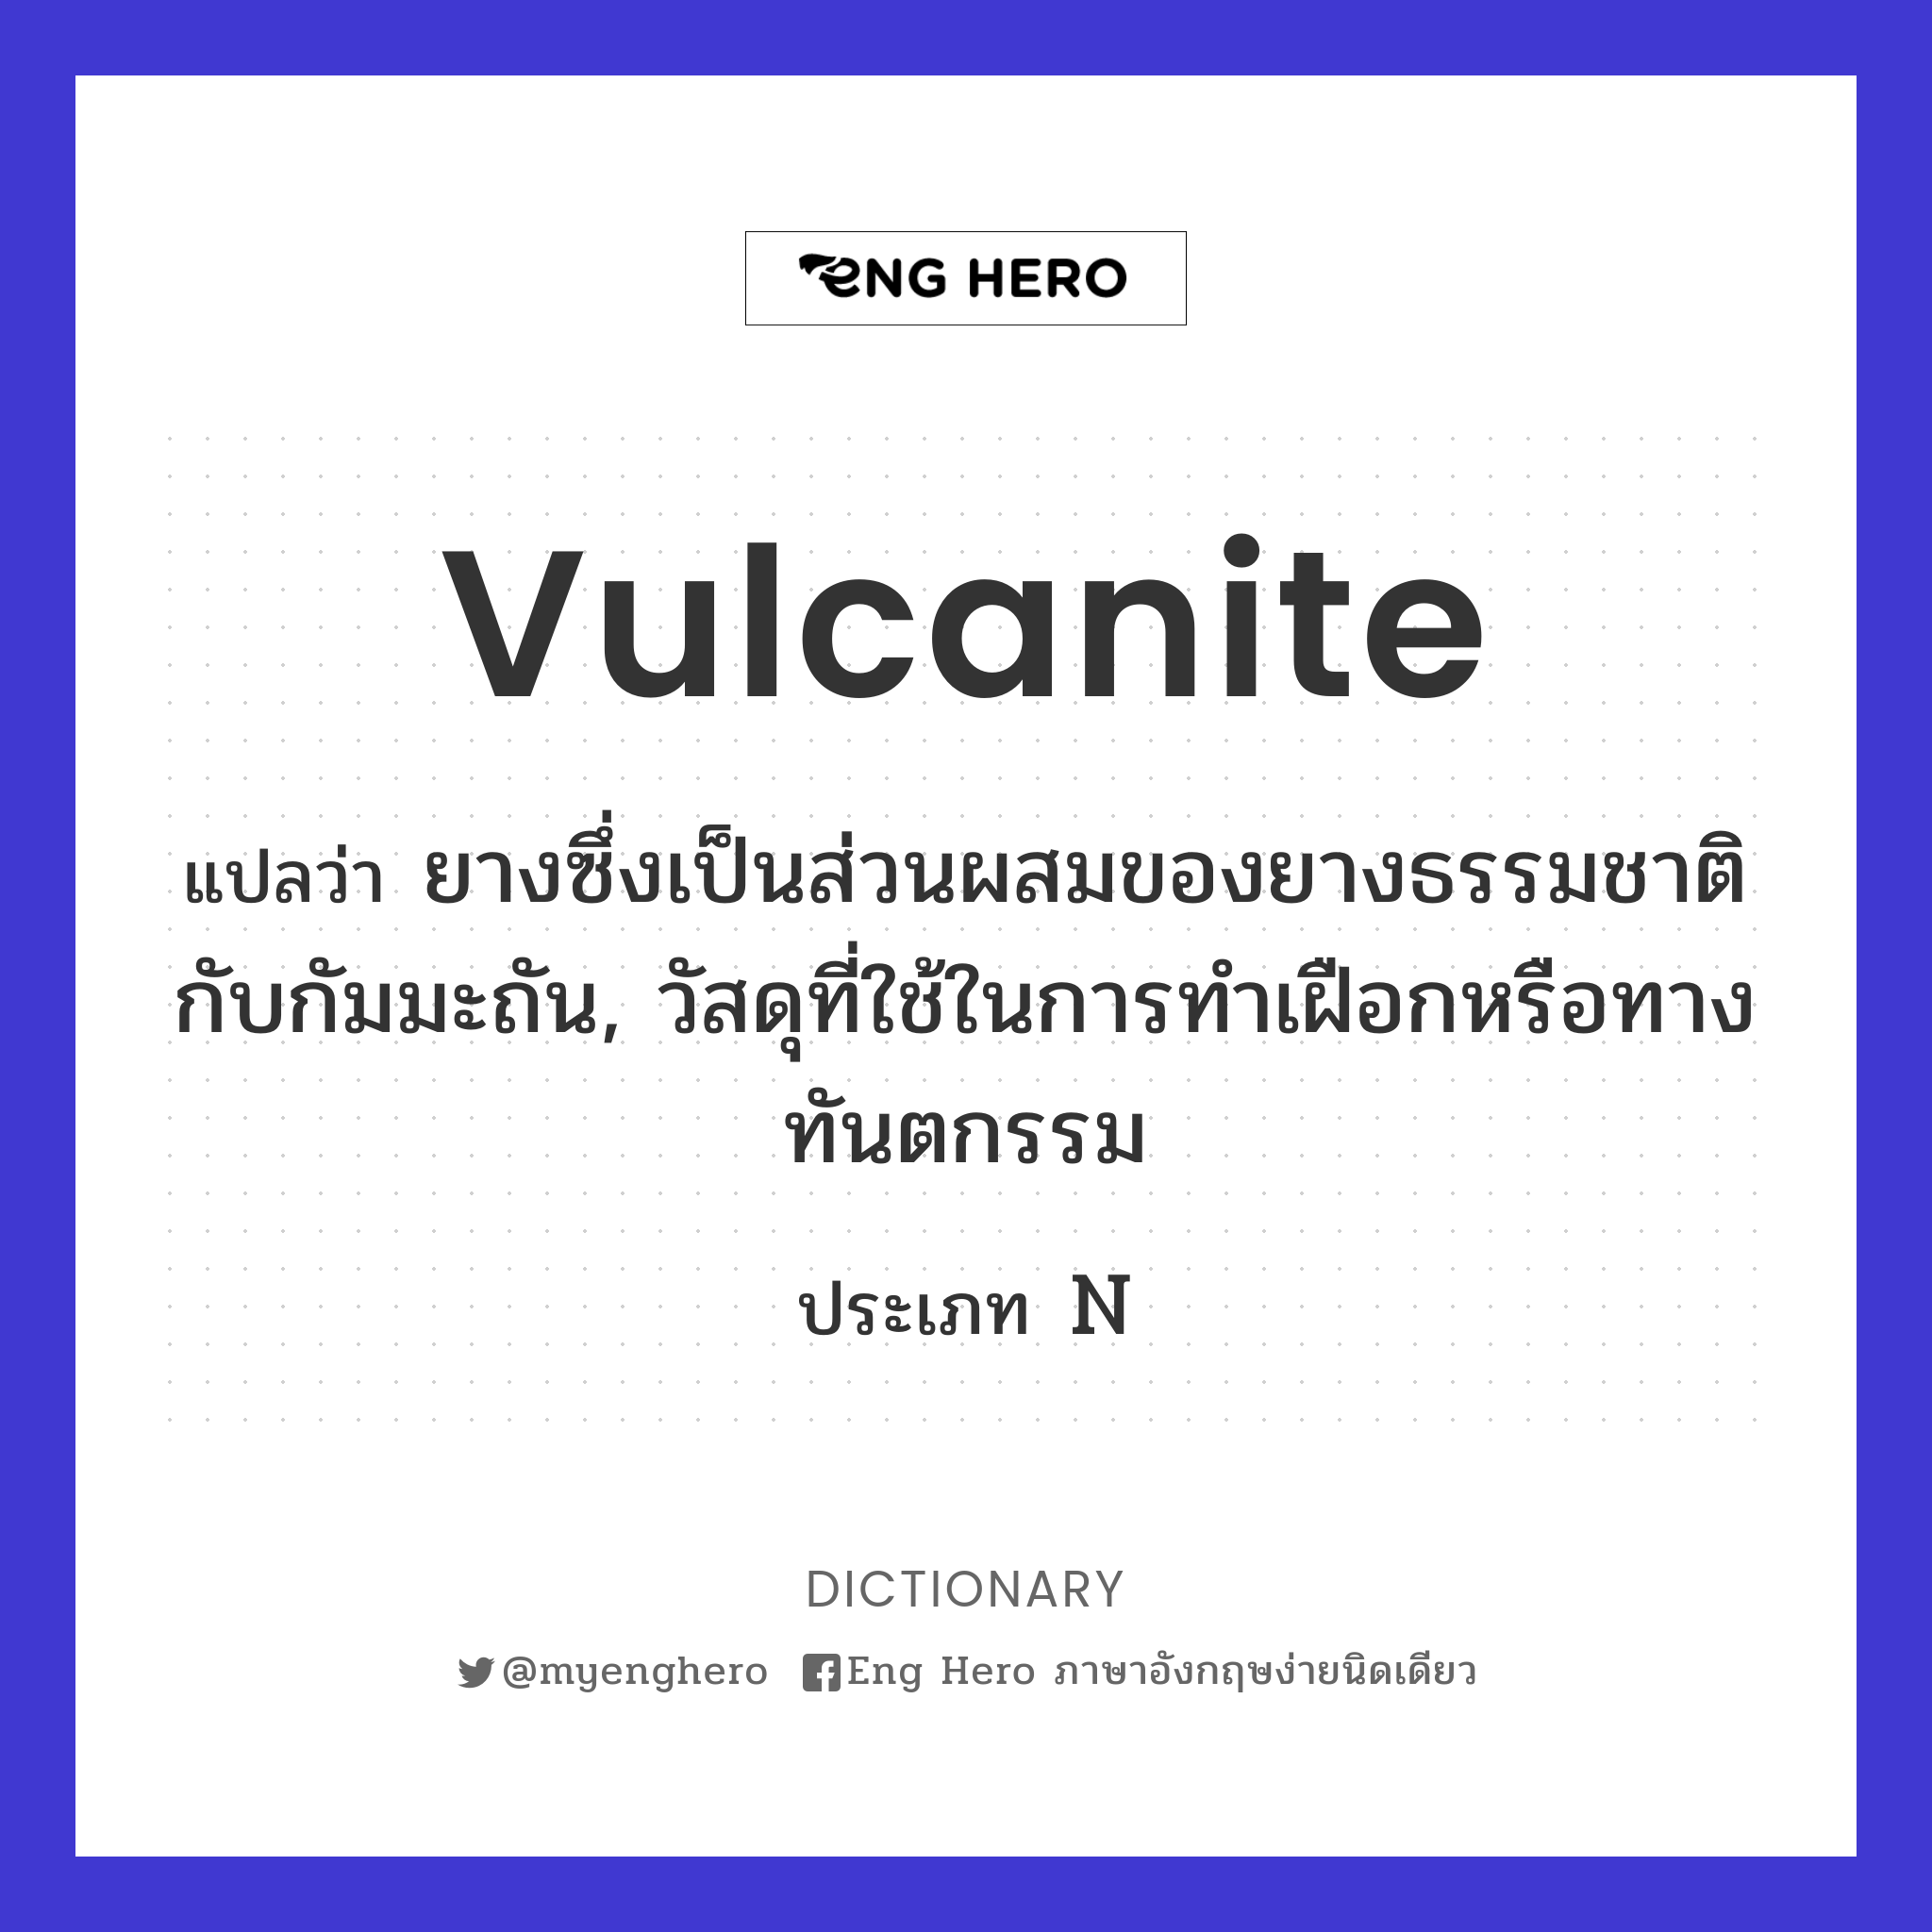 vulcanite